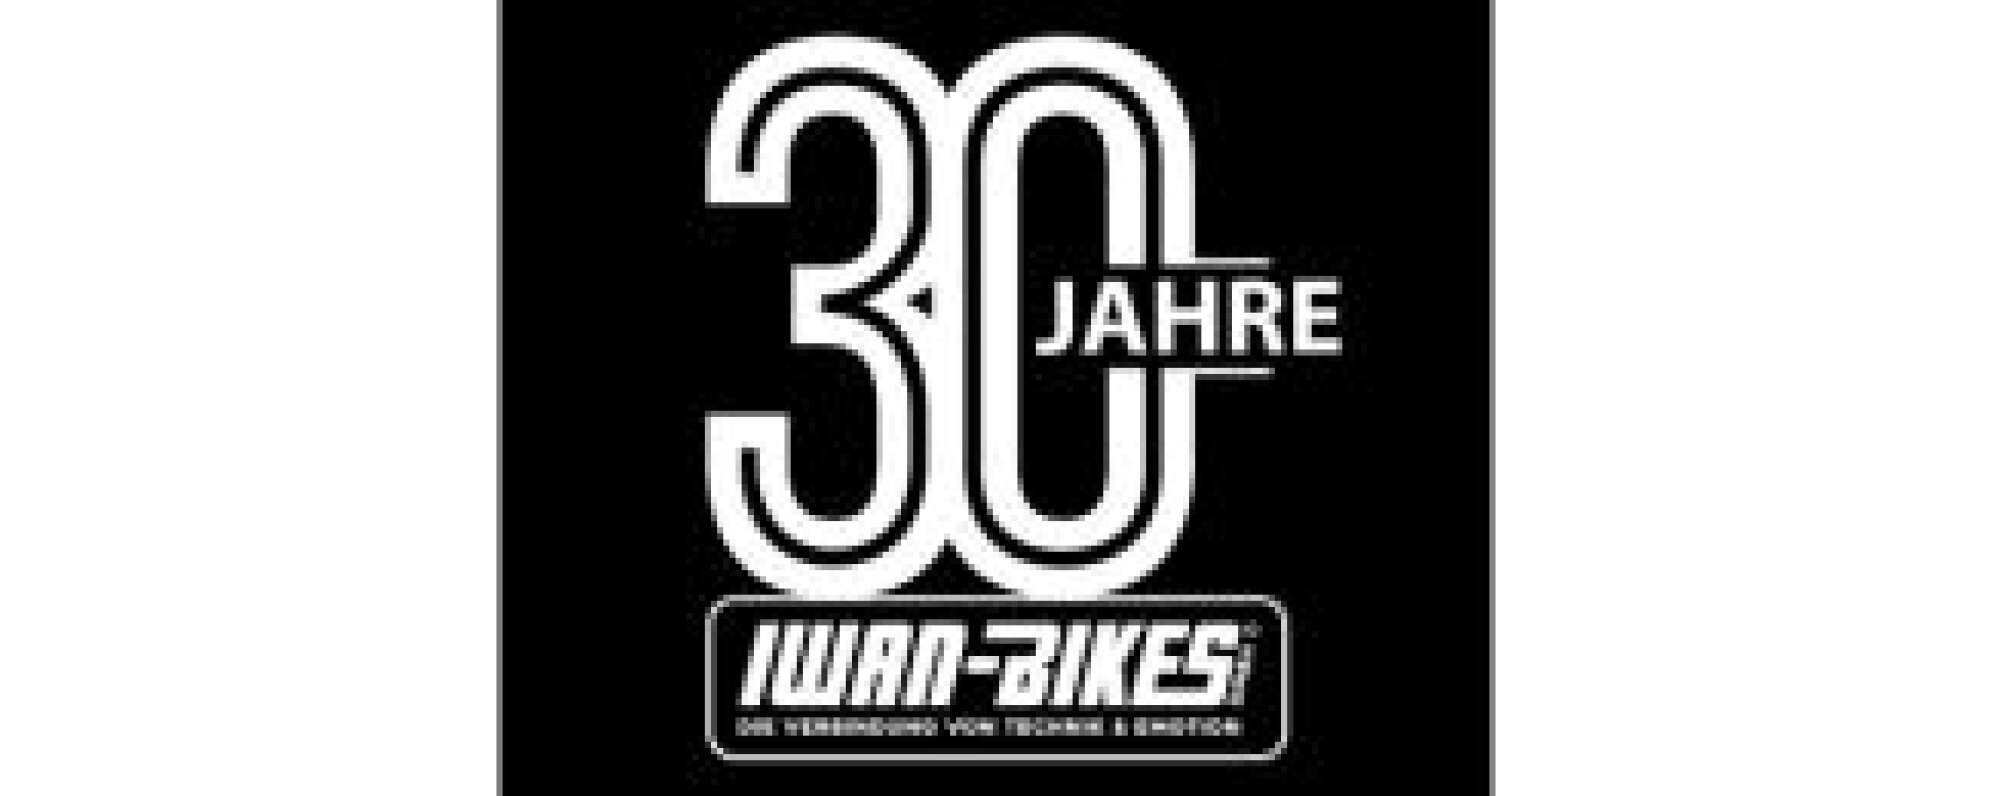 30 Jahre Iwan Bikes